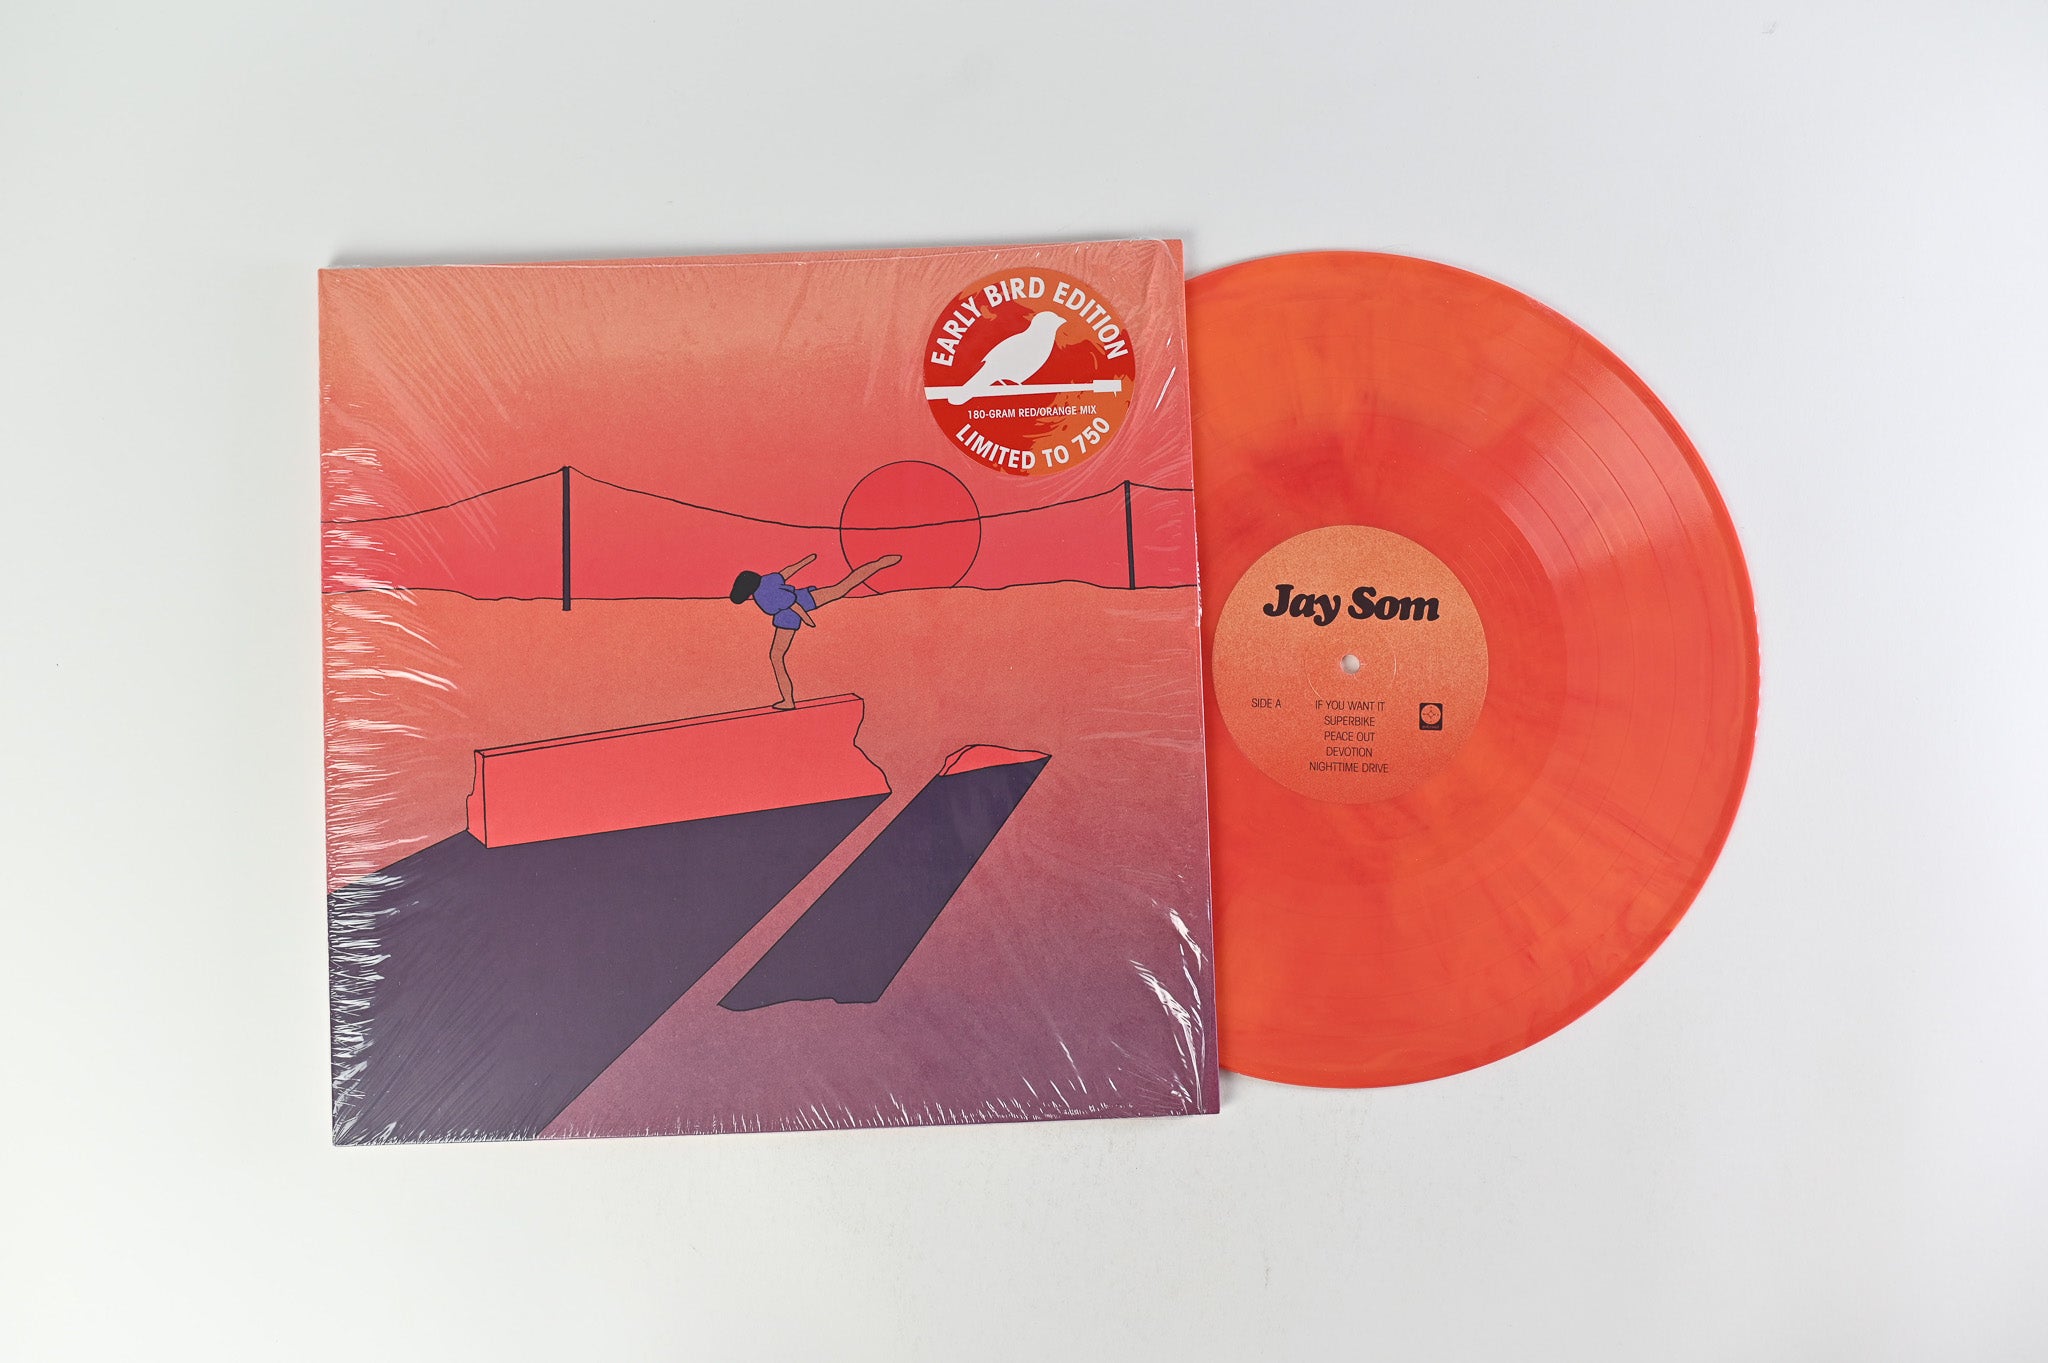 Jay Som - Anak Ko on Polyvinyl Record Company - Red/Orange Colored Vinyl